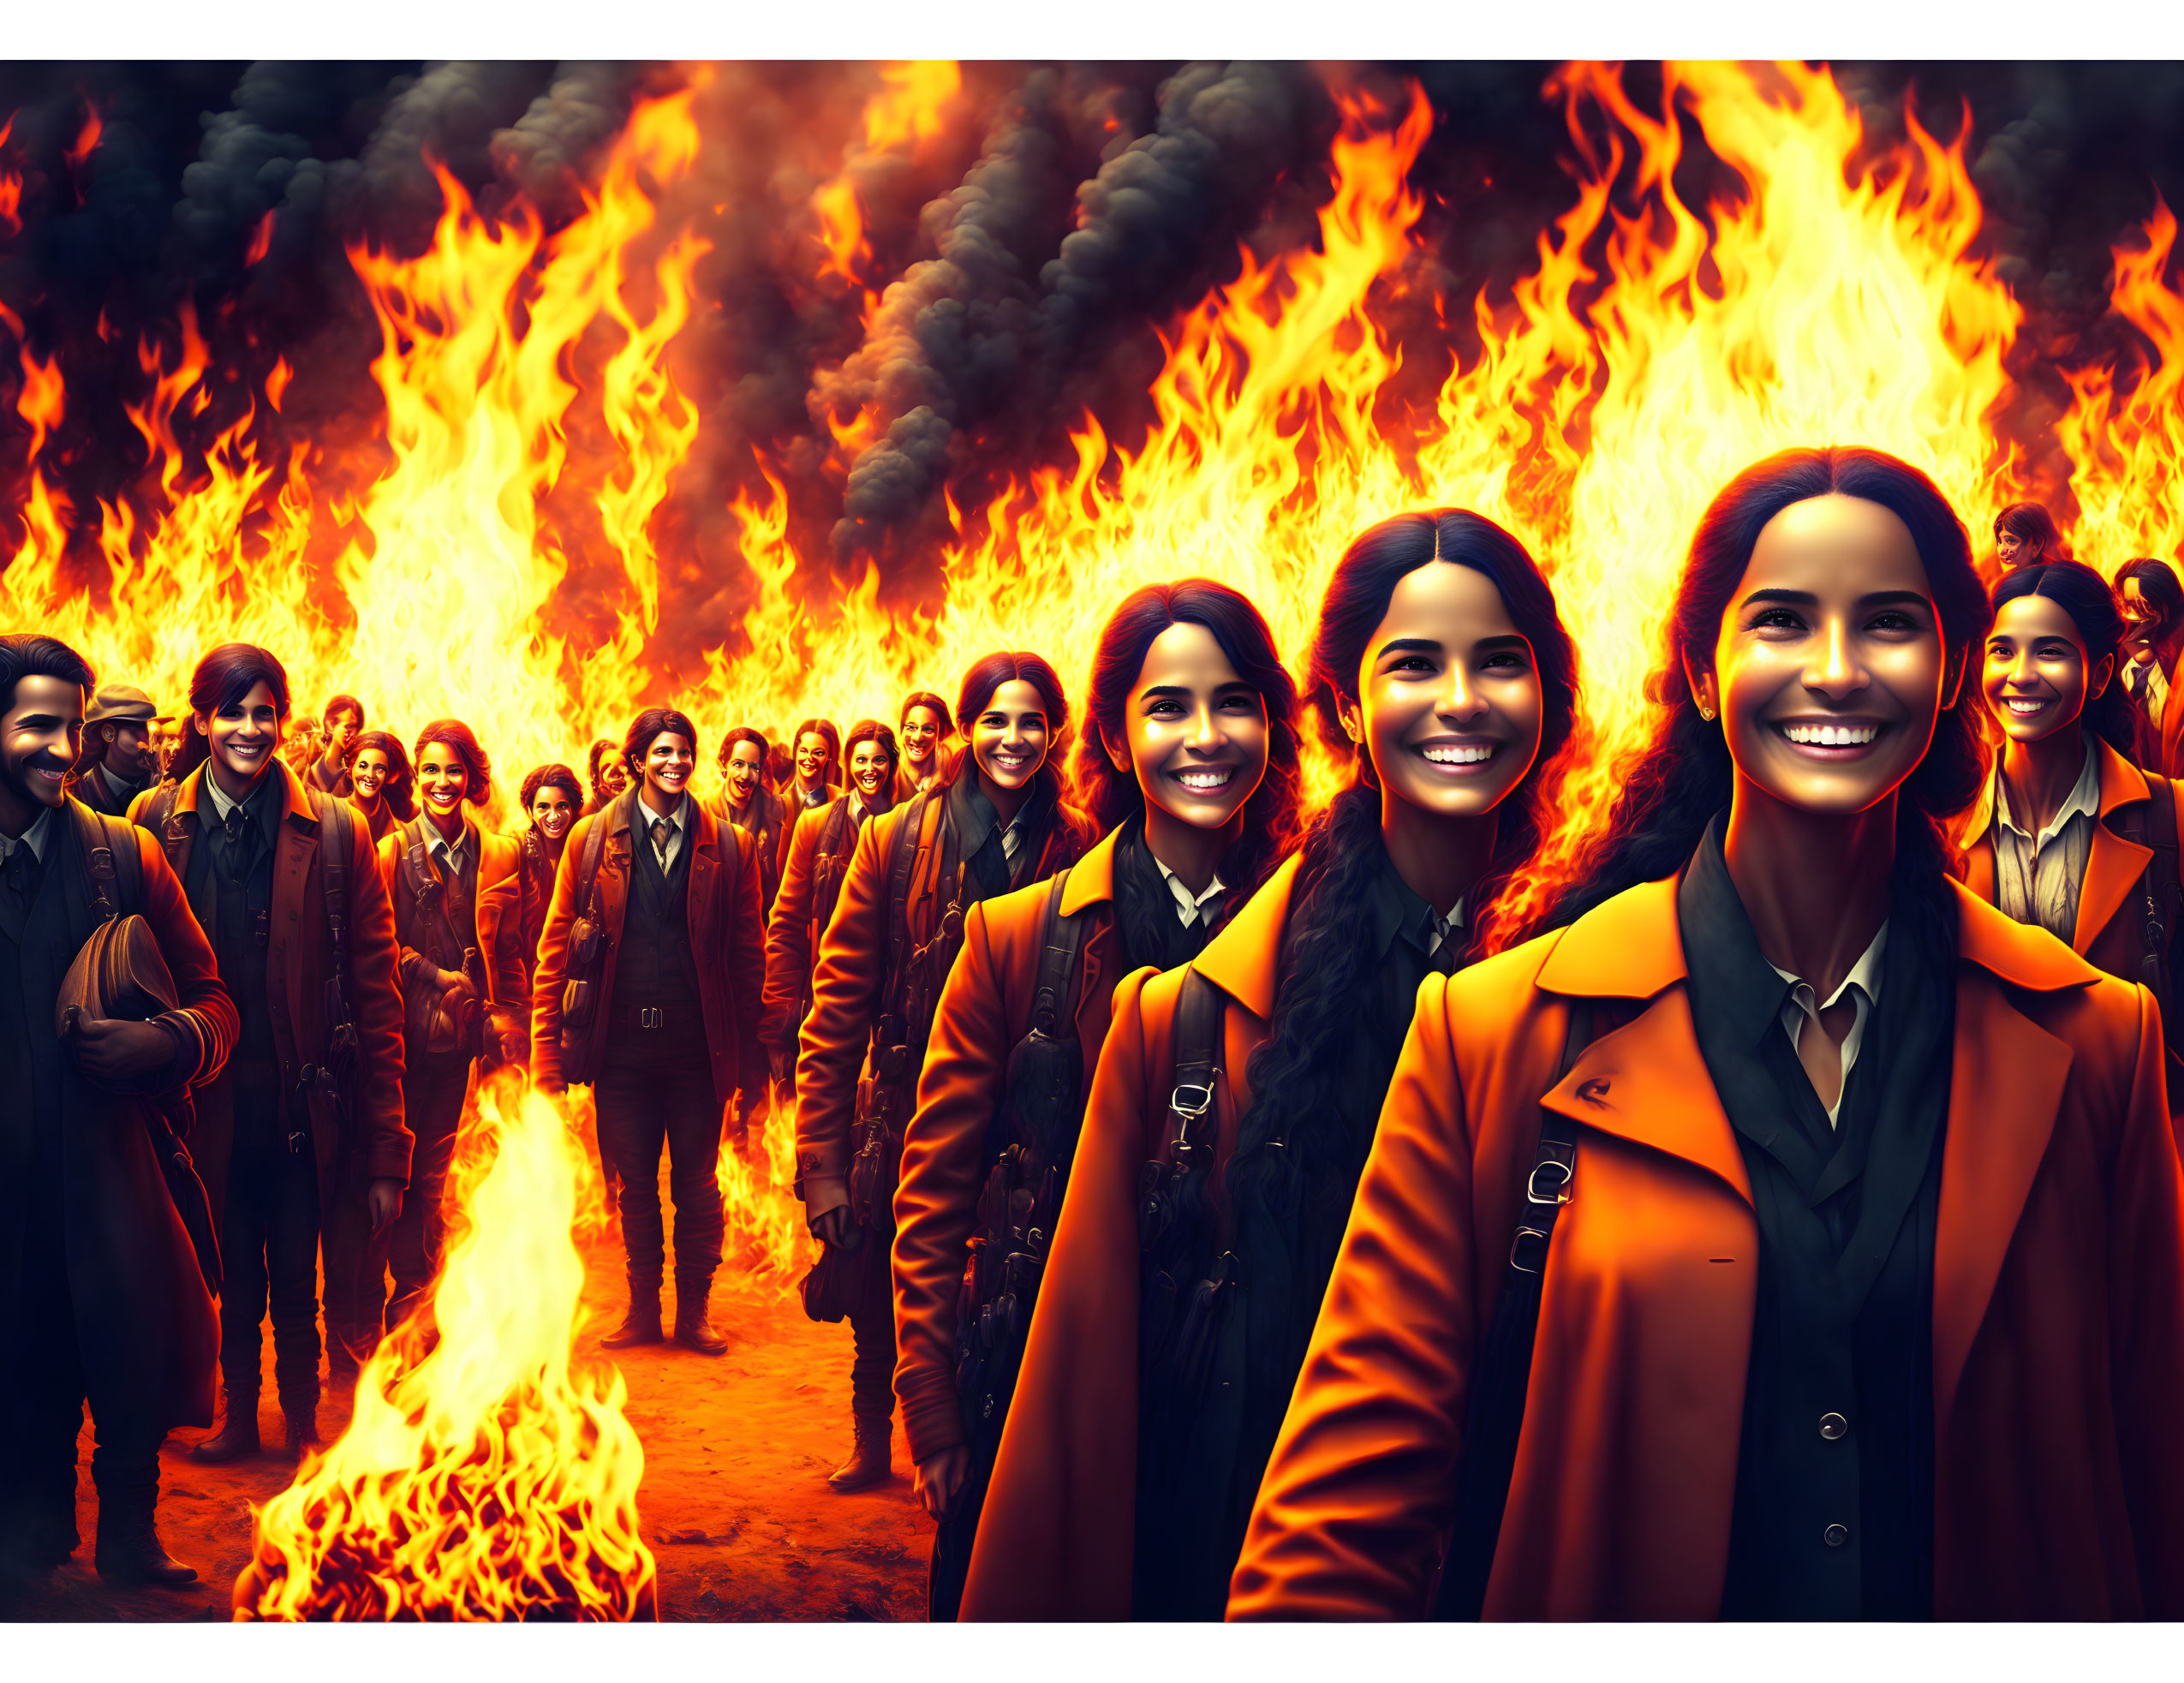 Smiling people in dark coats against towering flames